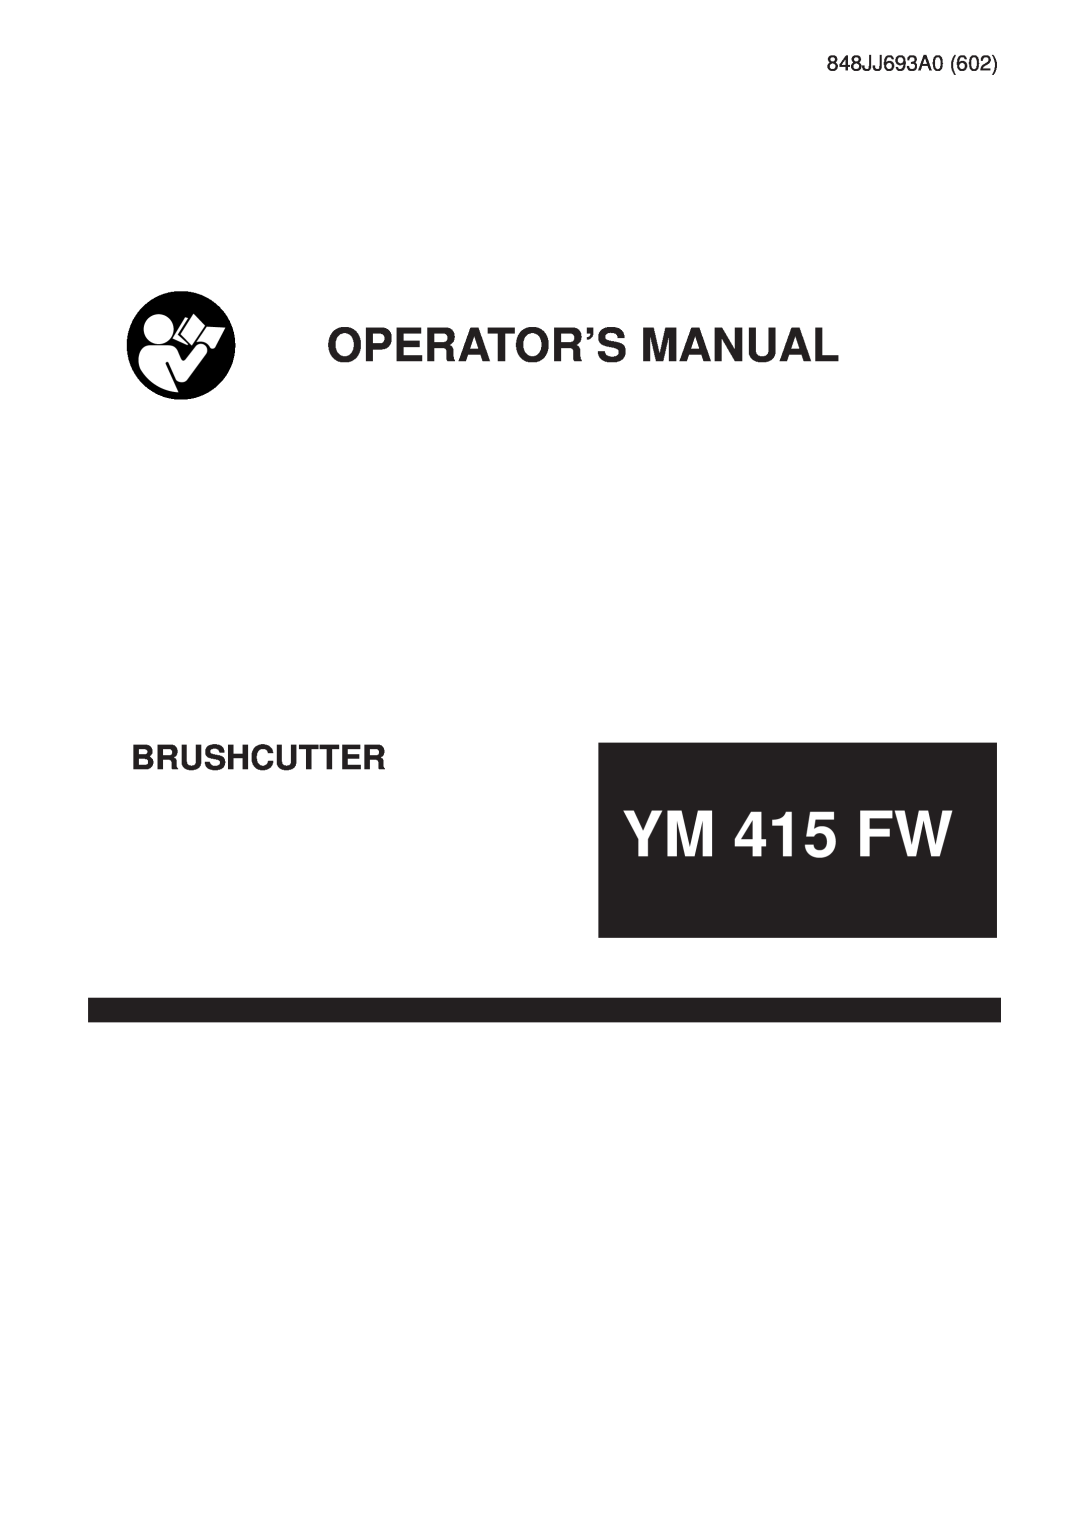 Zenoah YM415FW manual YM 415 FW, Operator’S Manual, Brushcutter, 848JJ693A0 